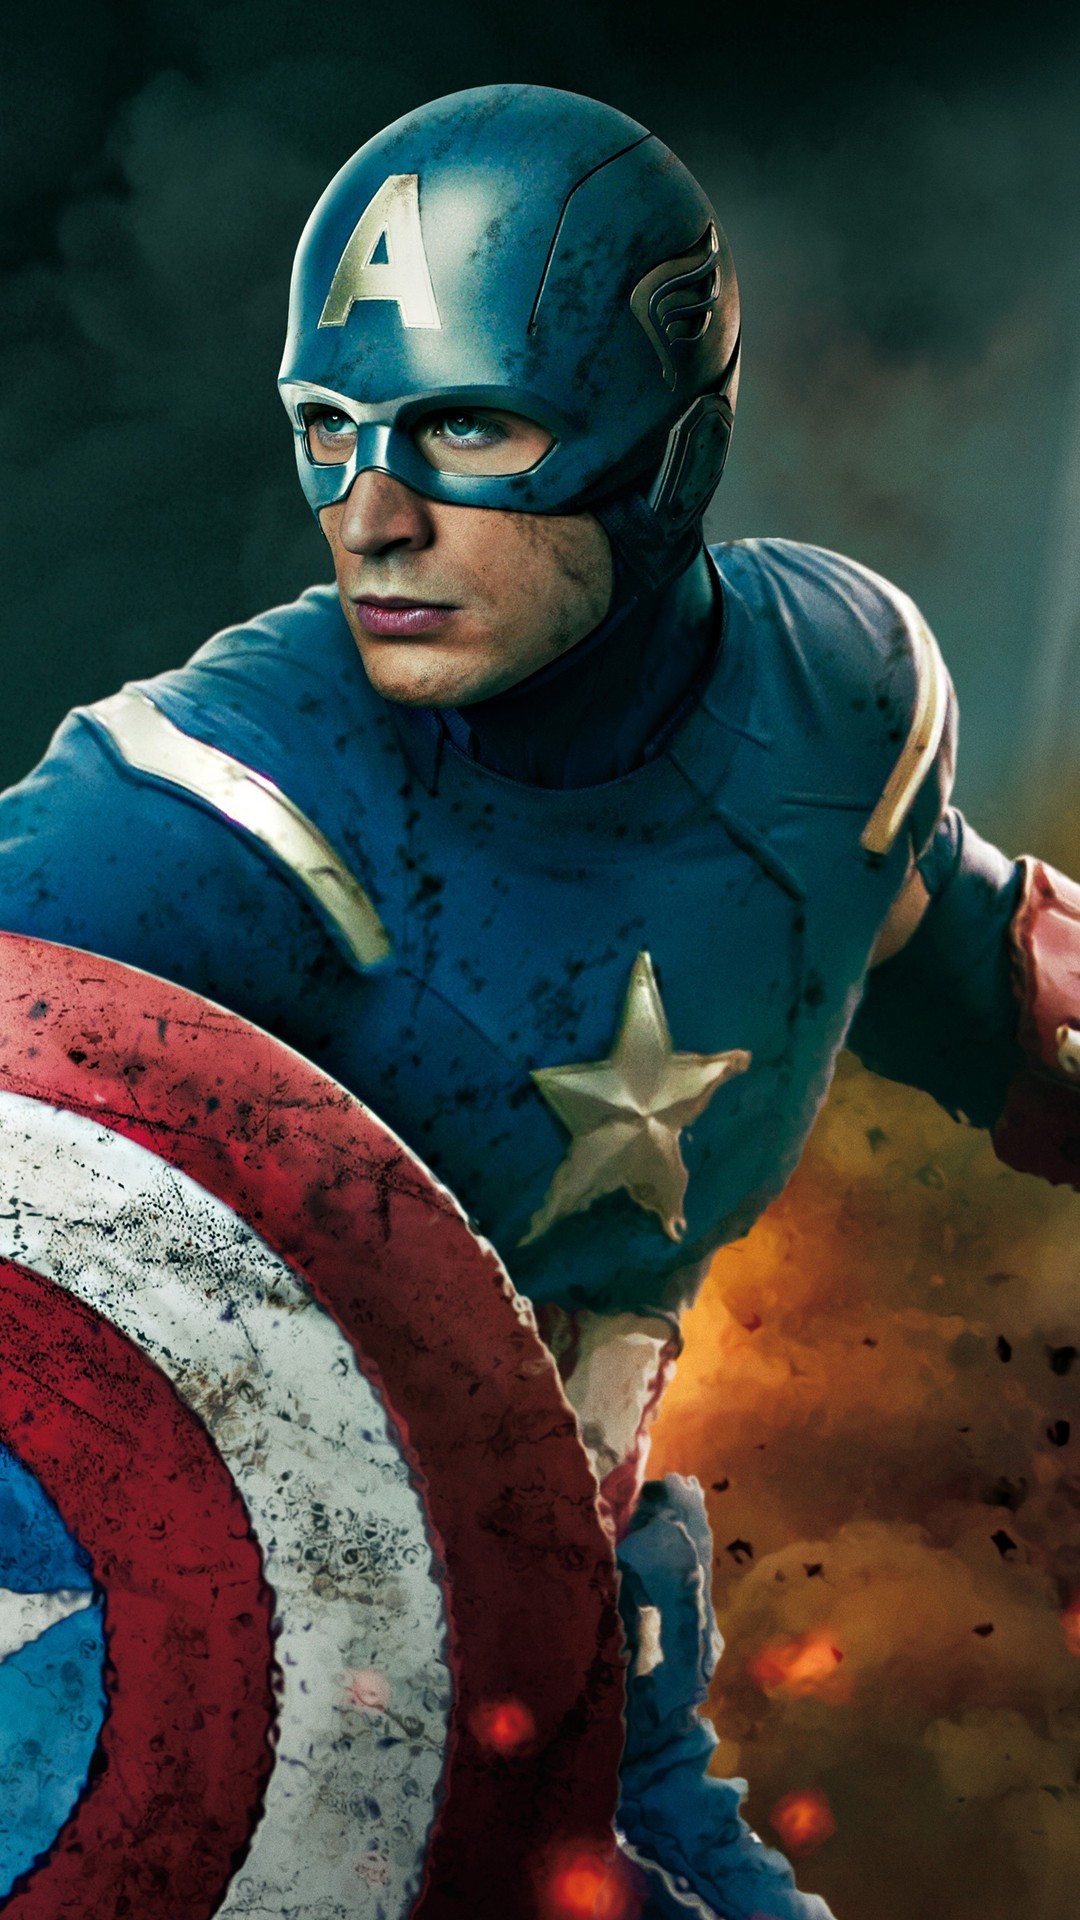 fondo de pantalla de avengers para móvil,capitan america,superhéroe,héroe,personaje de ficción,vengadores